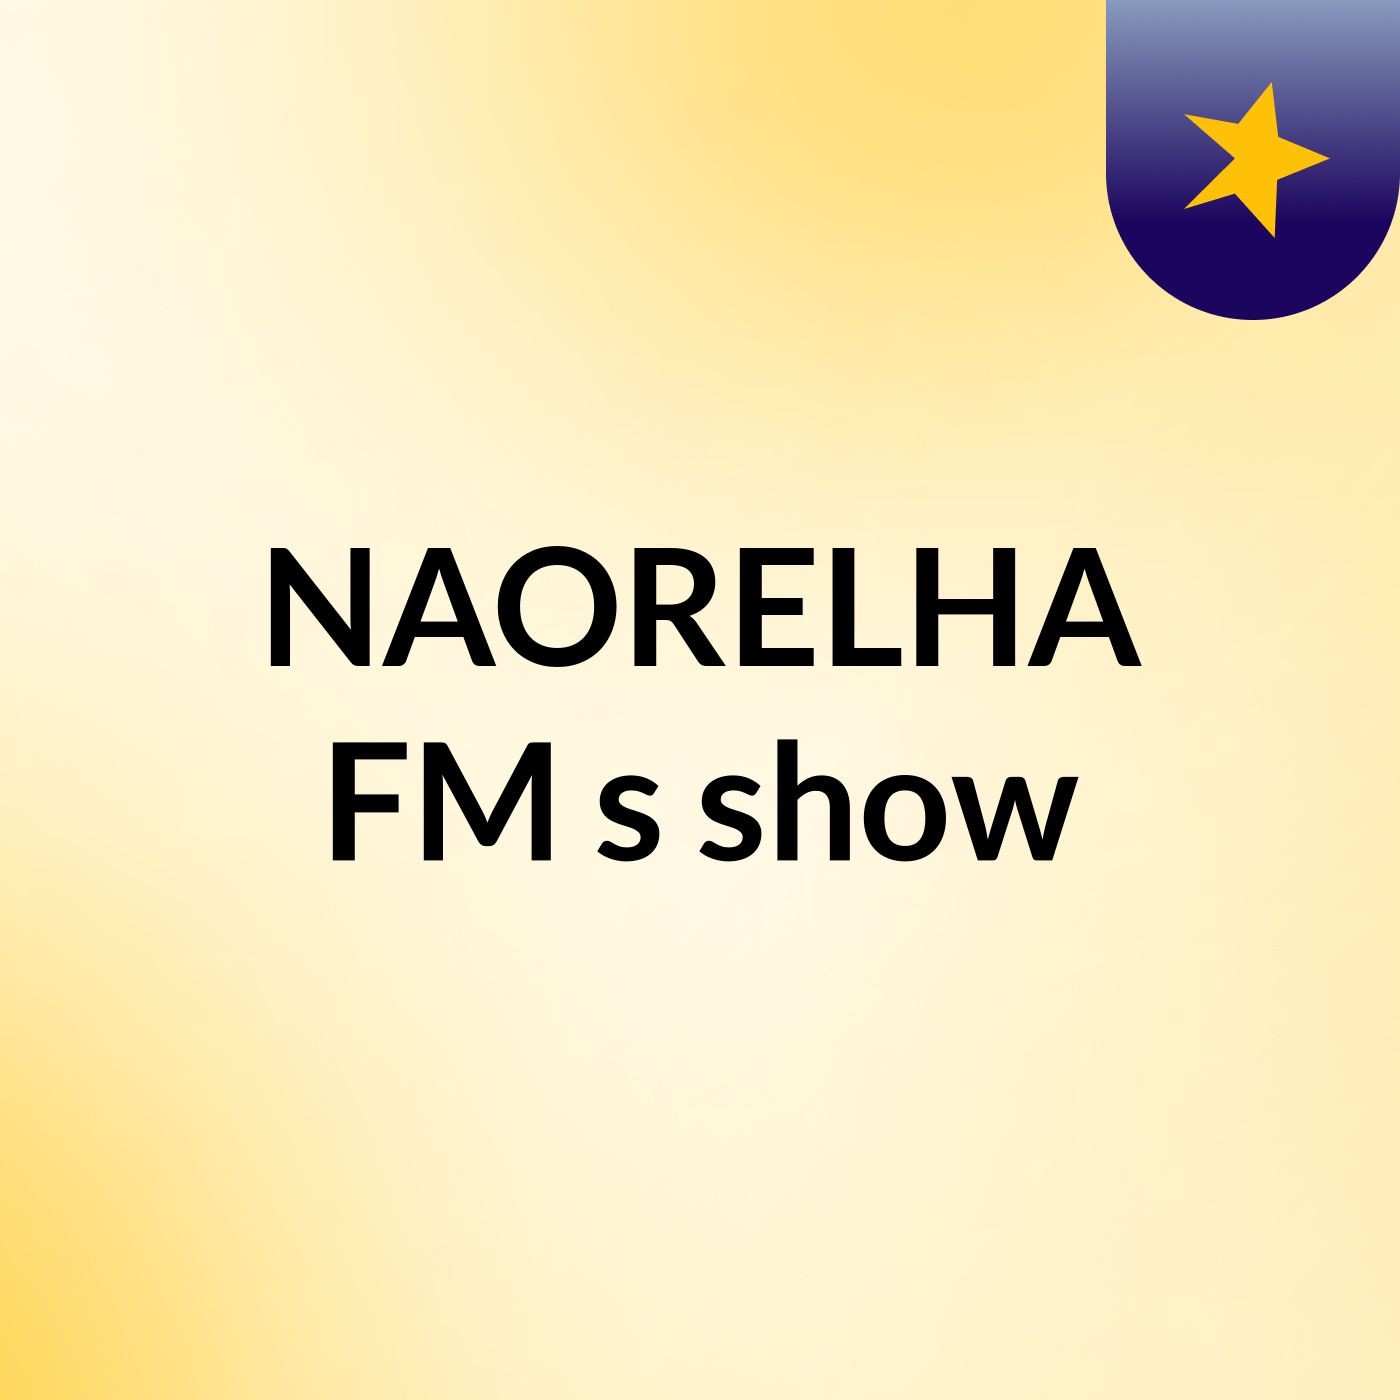 NAORELHA FM's show